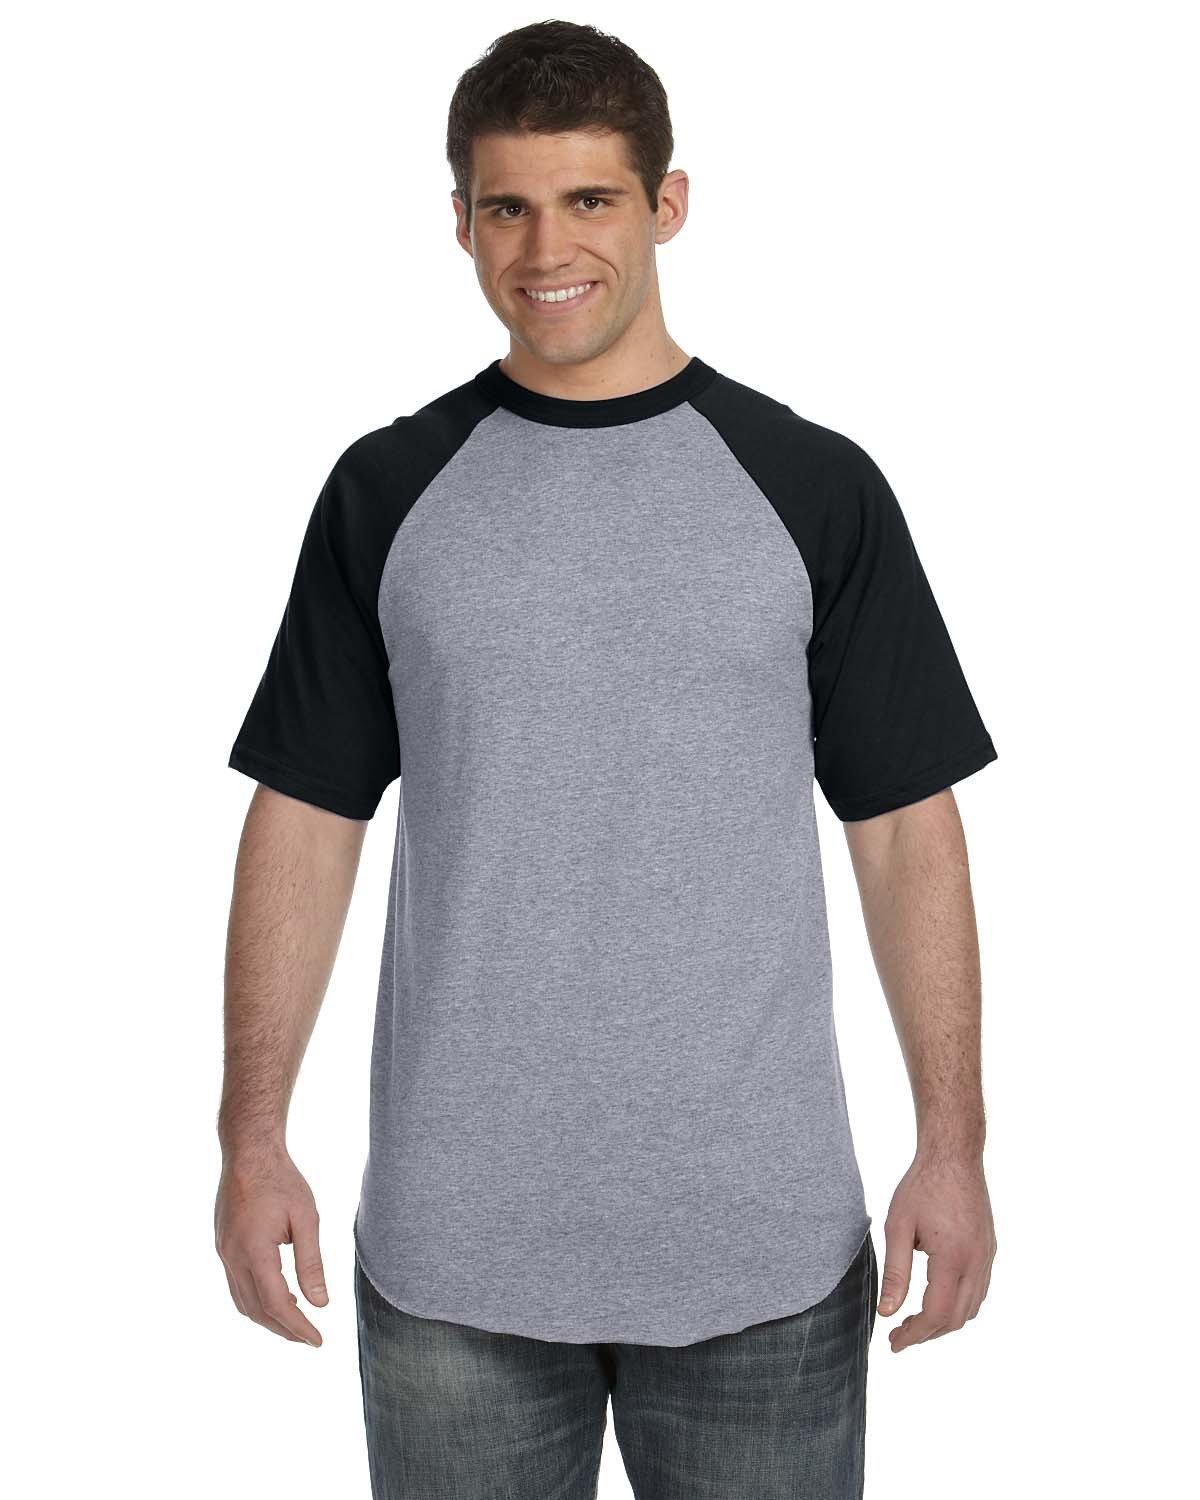 Augusta Sportswear Adult Short-Sleeve Baseball Jersey ATH HTHR/ BLACK 